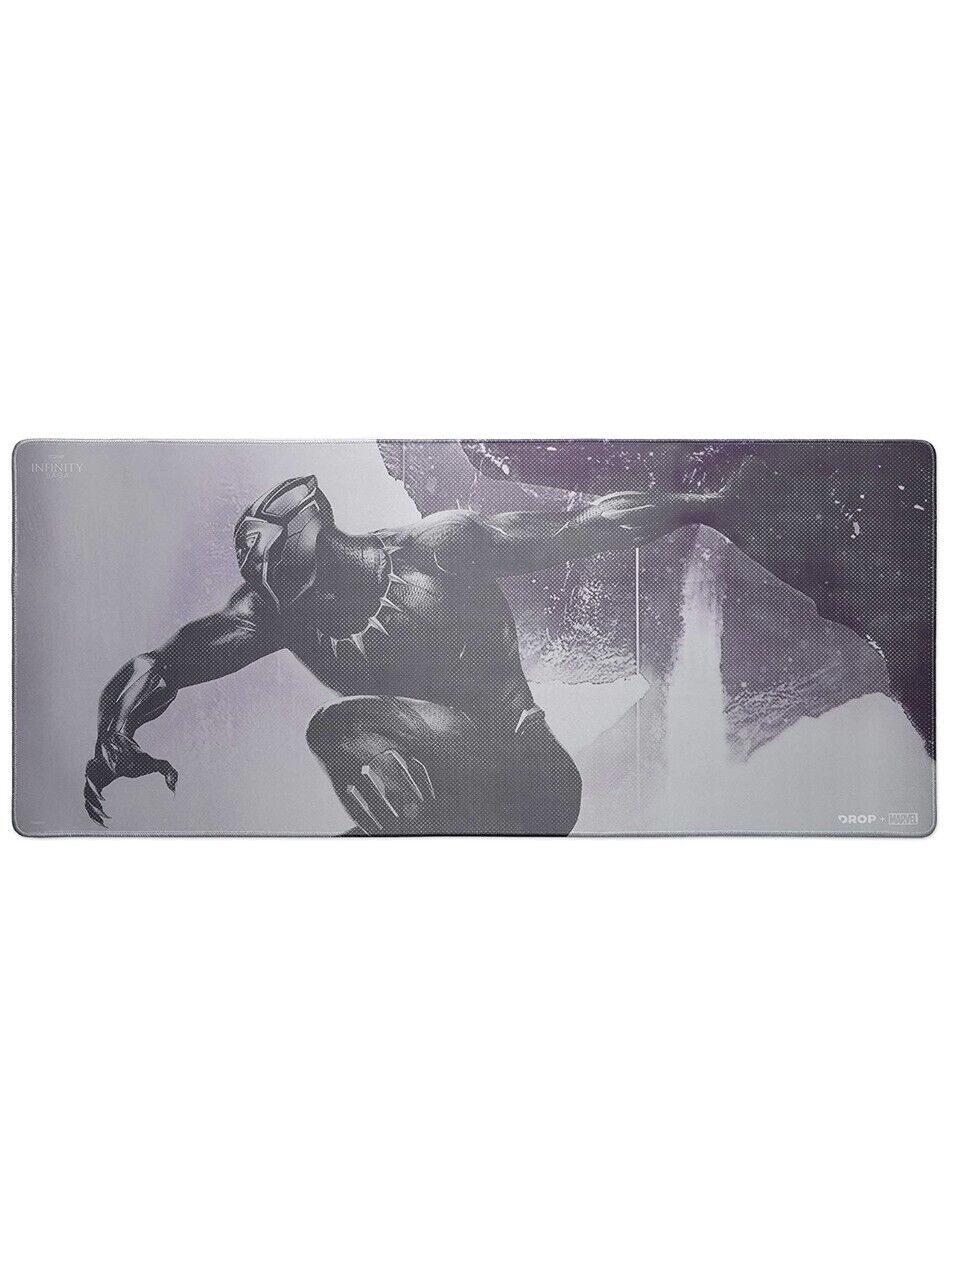 DROP + Marvel Comics Black Panther Deskmat XXL Desk Mat Anti-Slip Large New